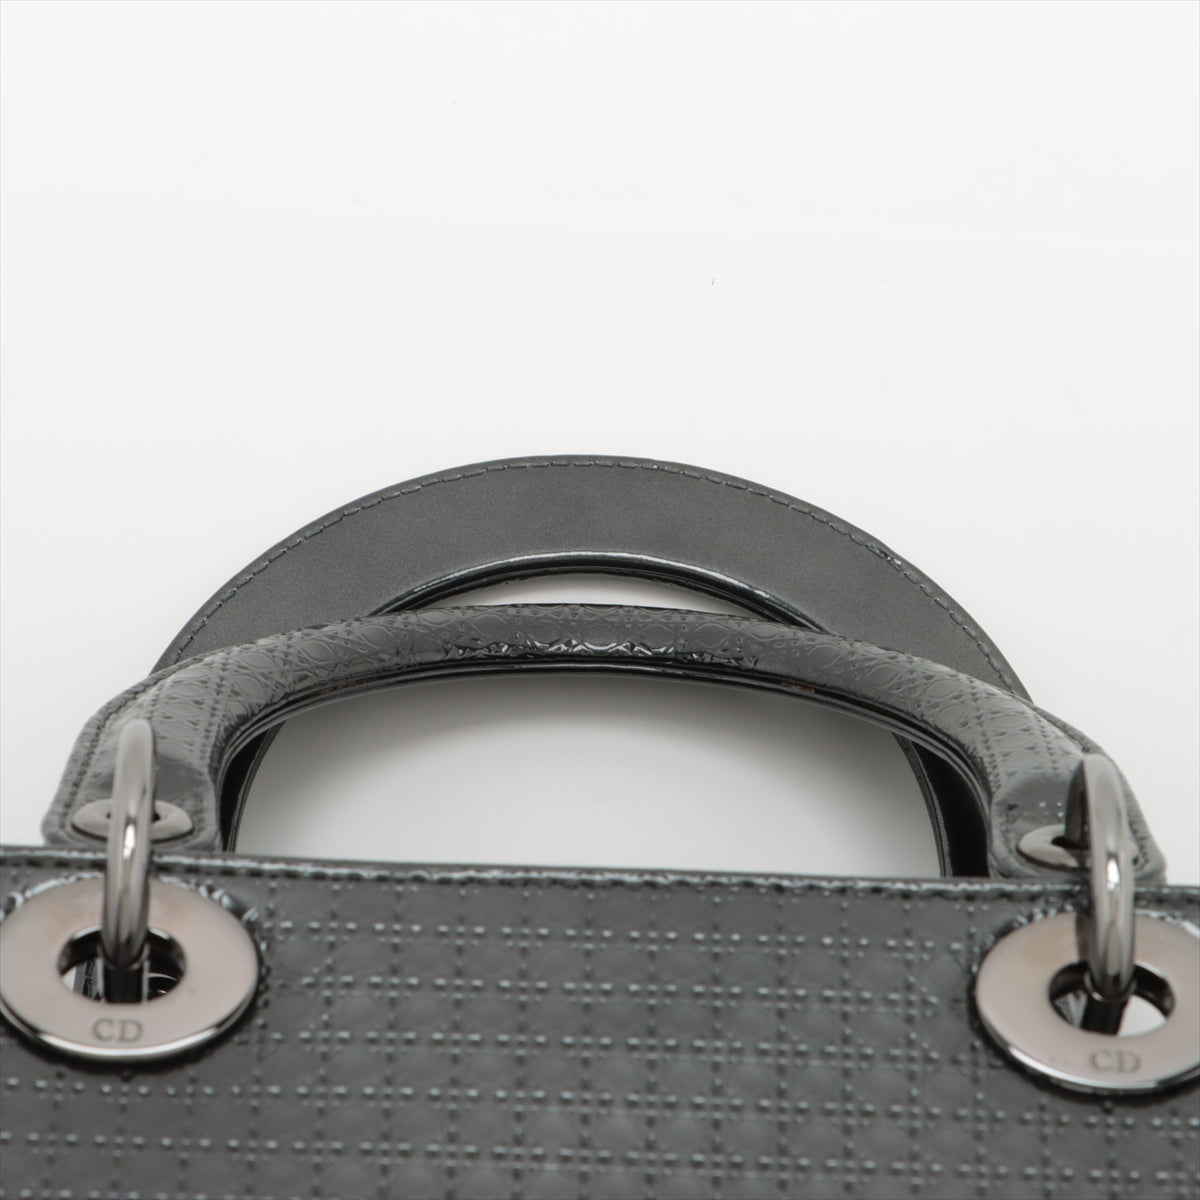 Christian Dior  Dior Lady Patent Leather 2WAY Handbag Gr